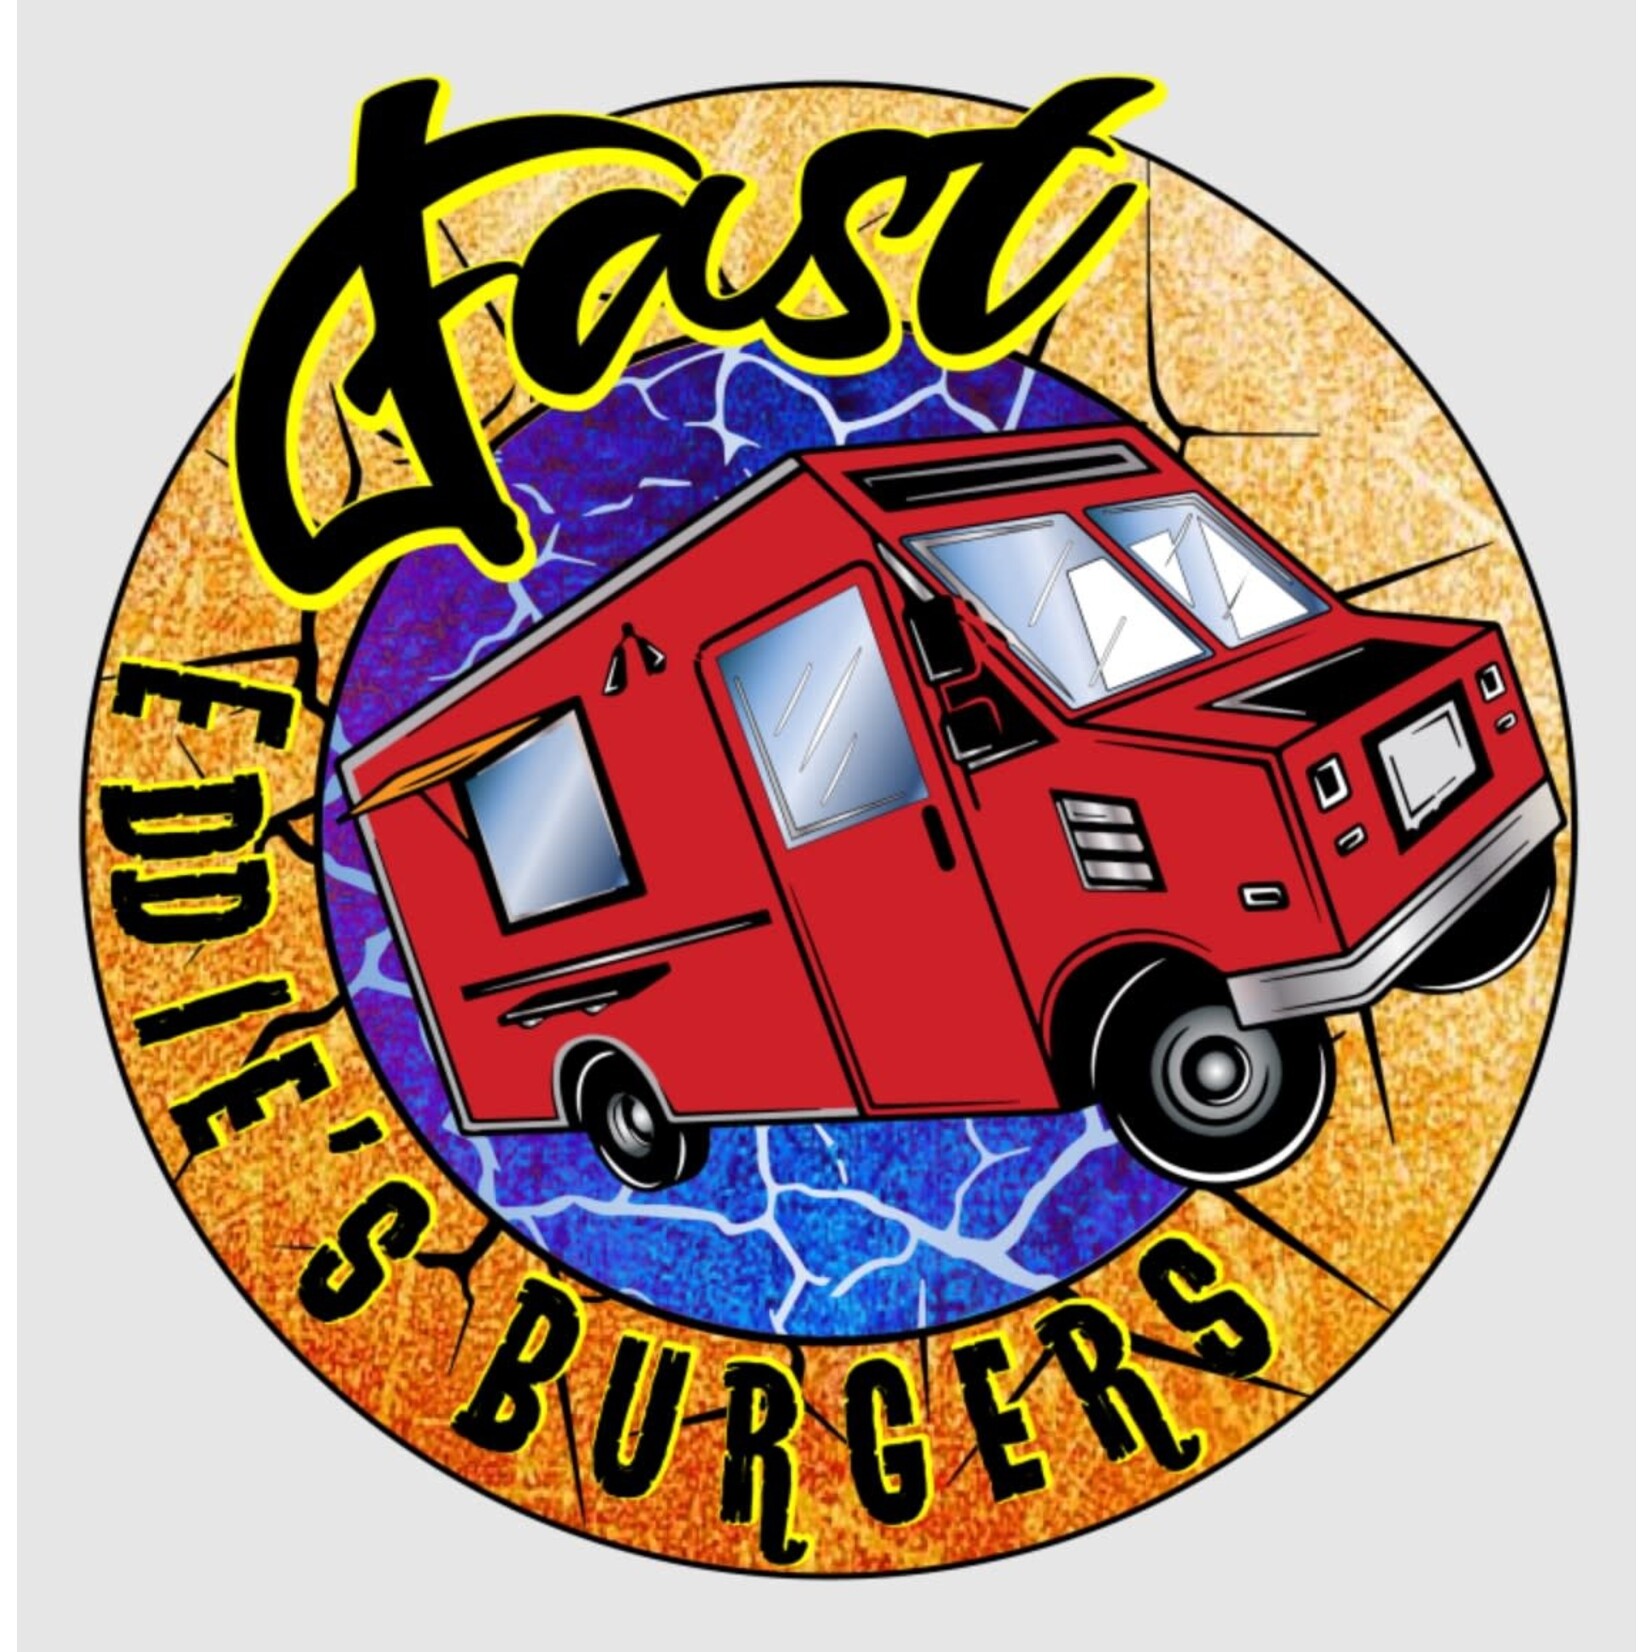 Fast Eddies Burgers Fast Eddies Burgers $15 - Menu items (Mobile Vendor )